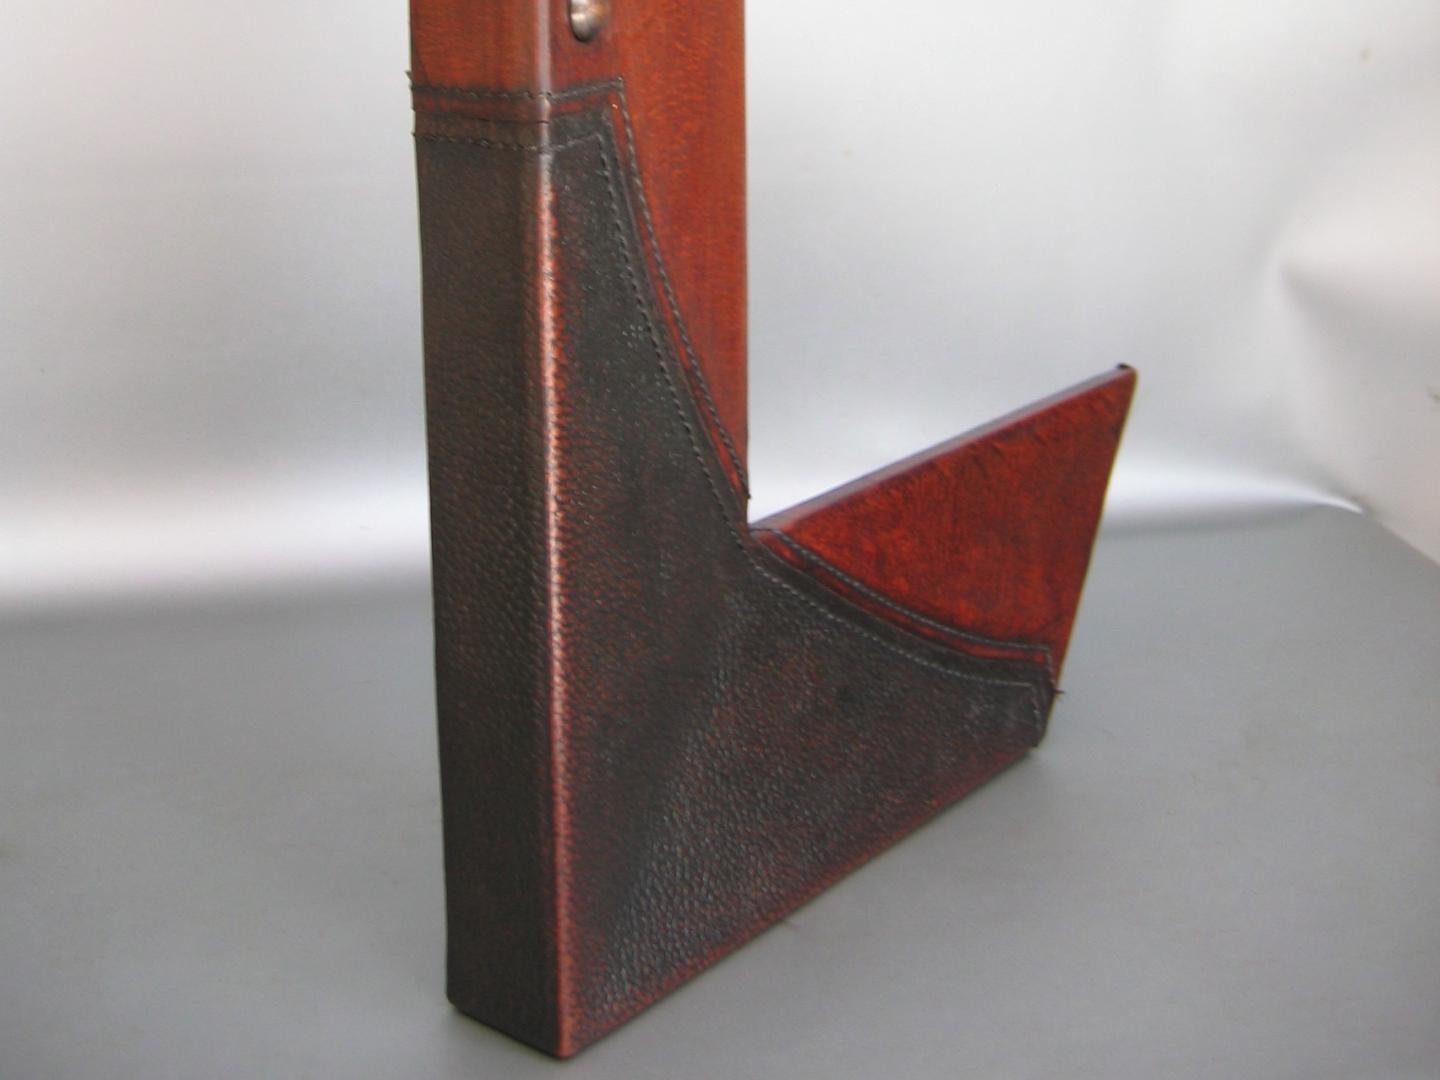 Handmade custom frame of natural leather